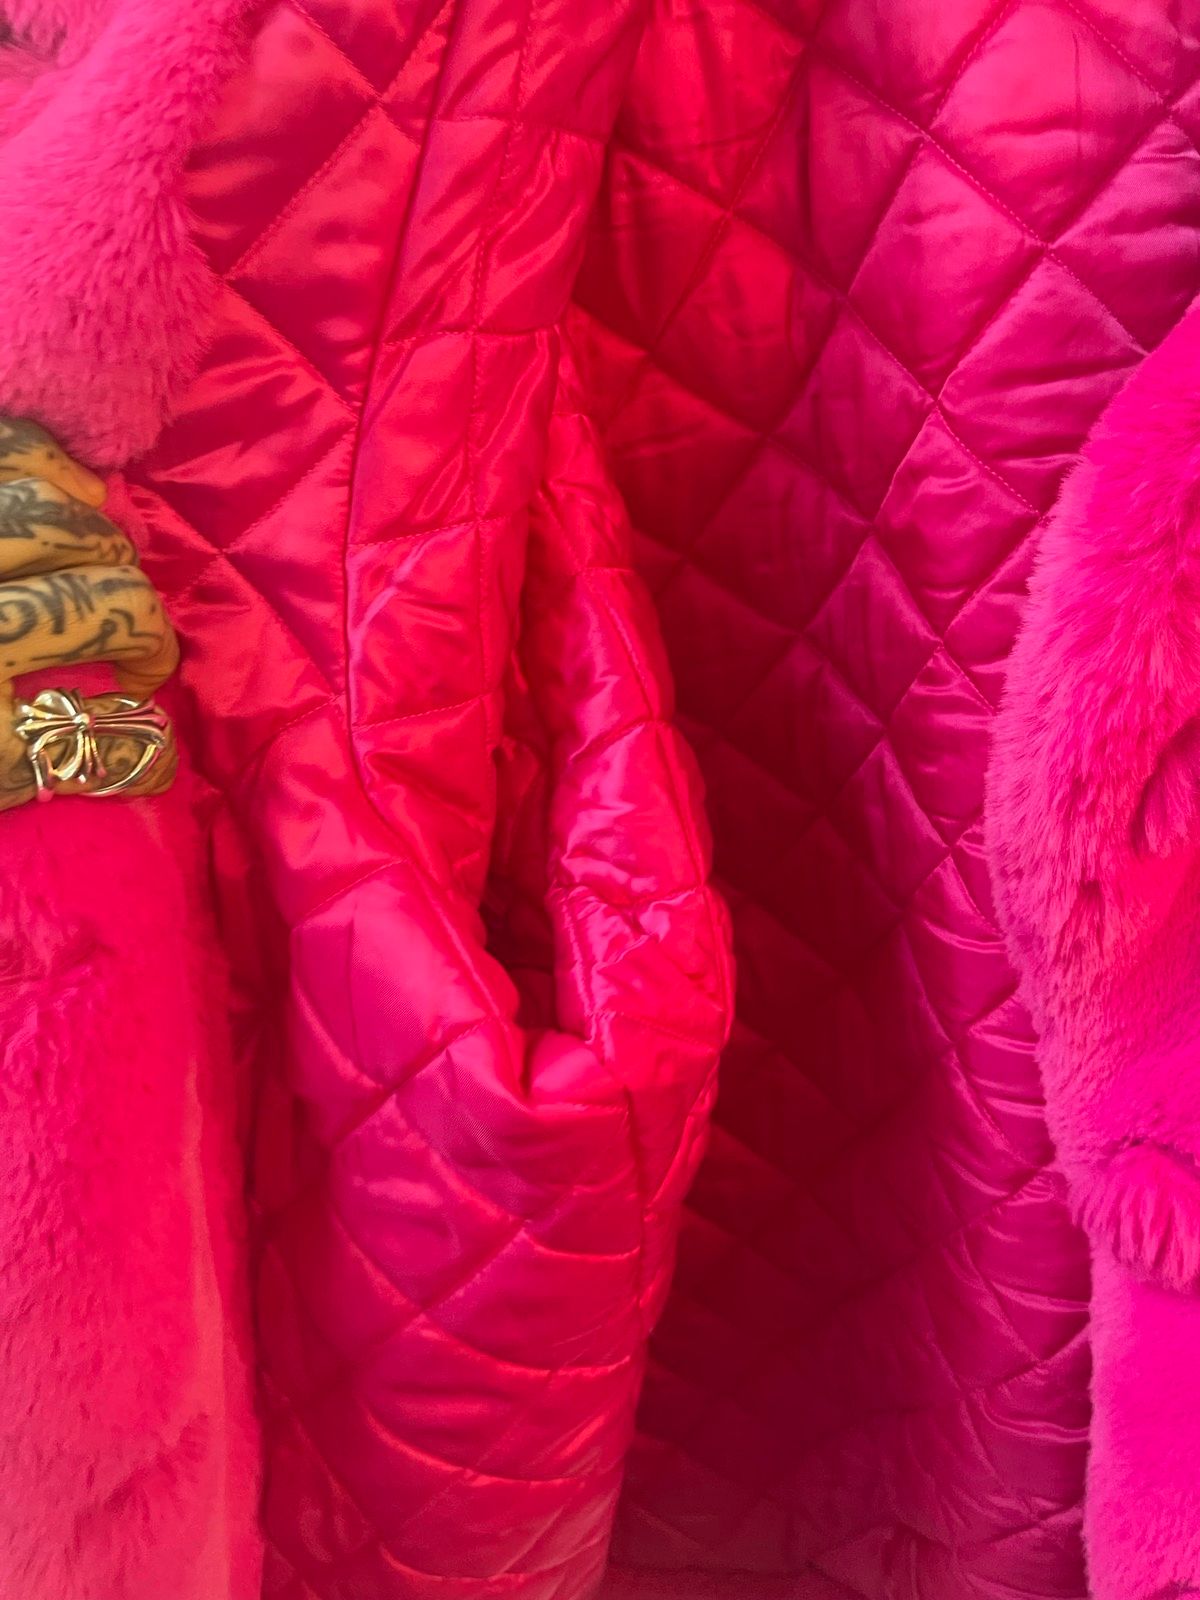 Balenciaga Fuchsia Pink OVERSIZE SWING COAT JACKET FUR